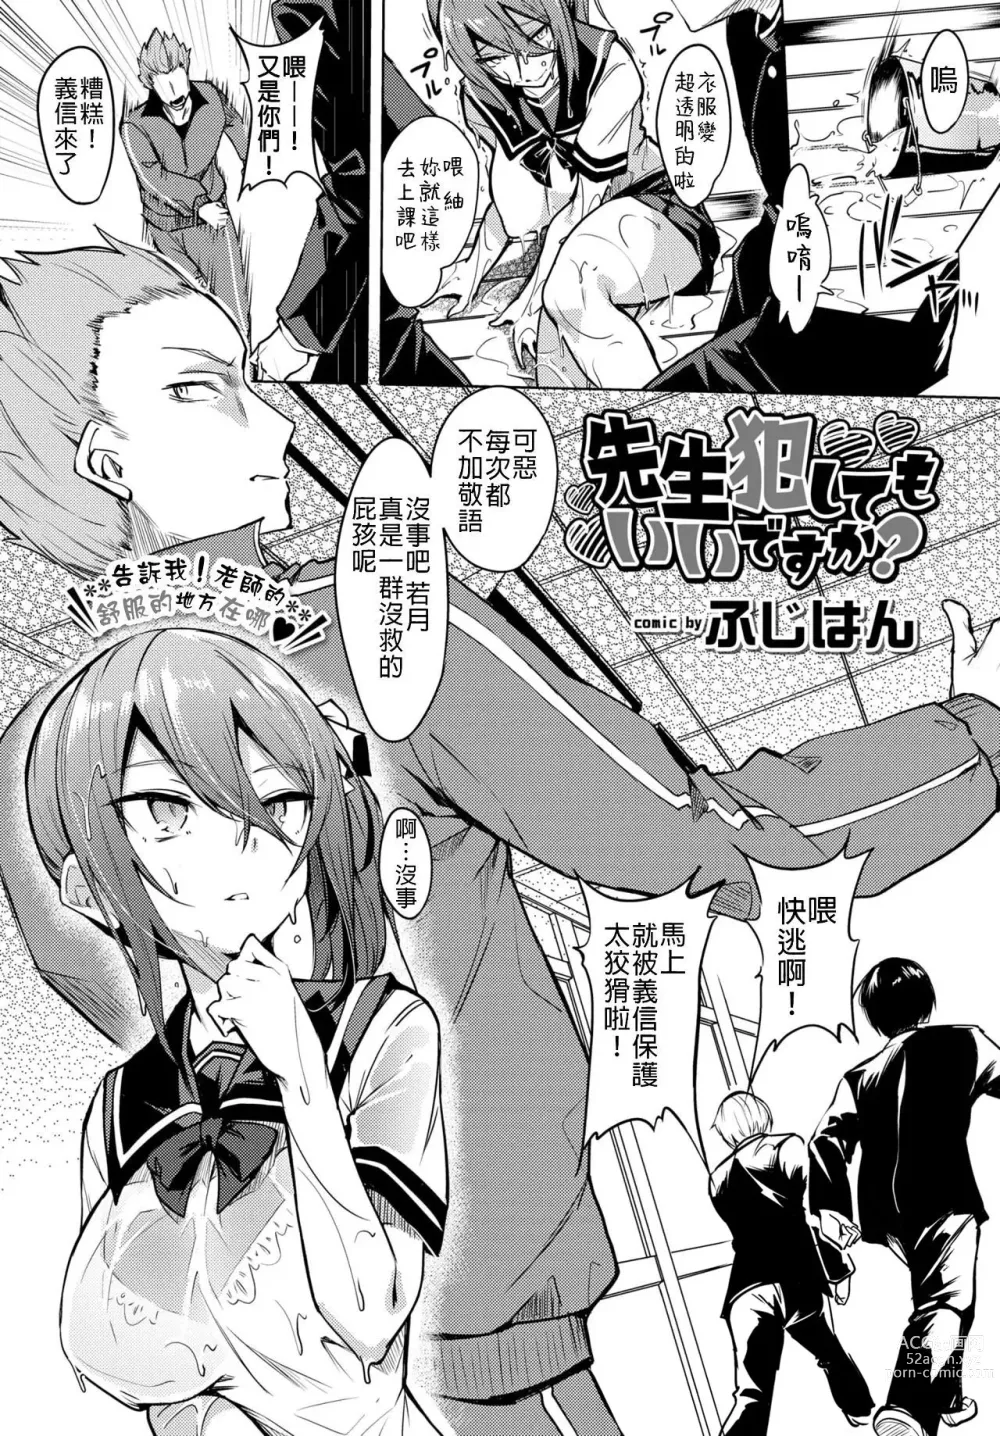 Page 5 of manga 黏呼呼的食譜 (uncensored)